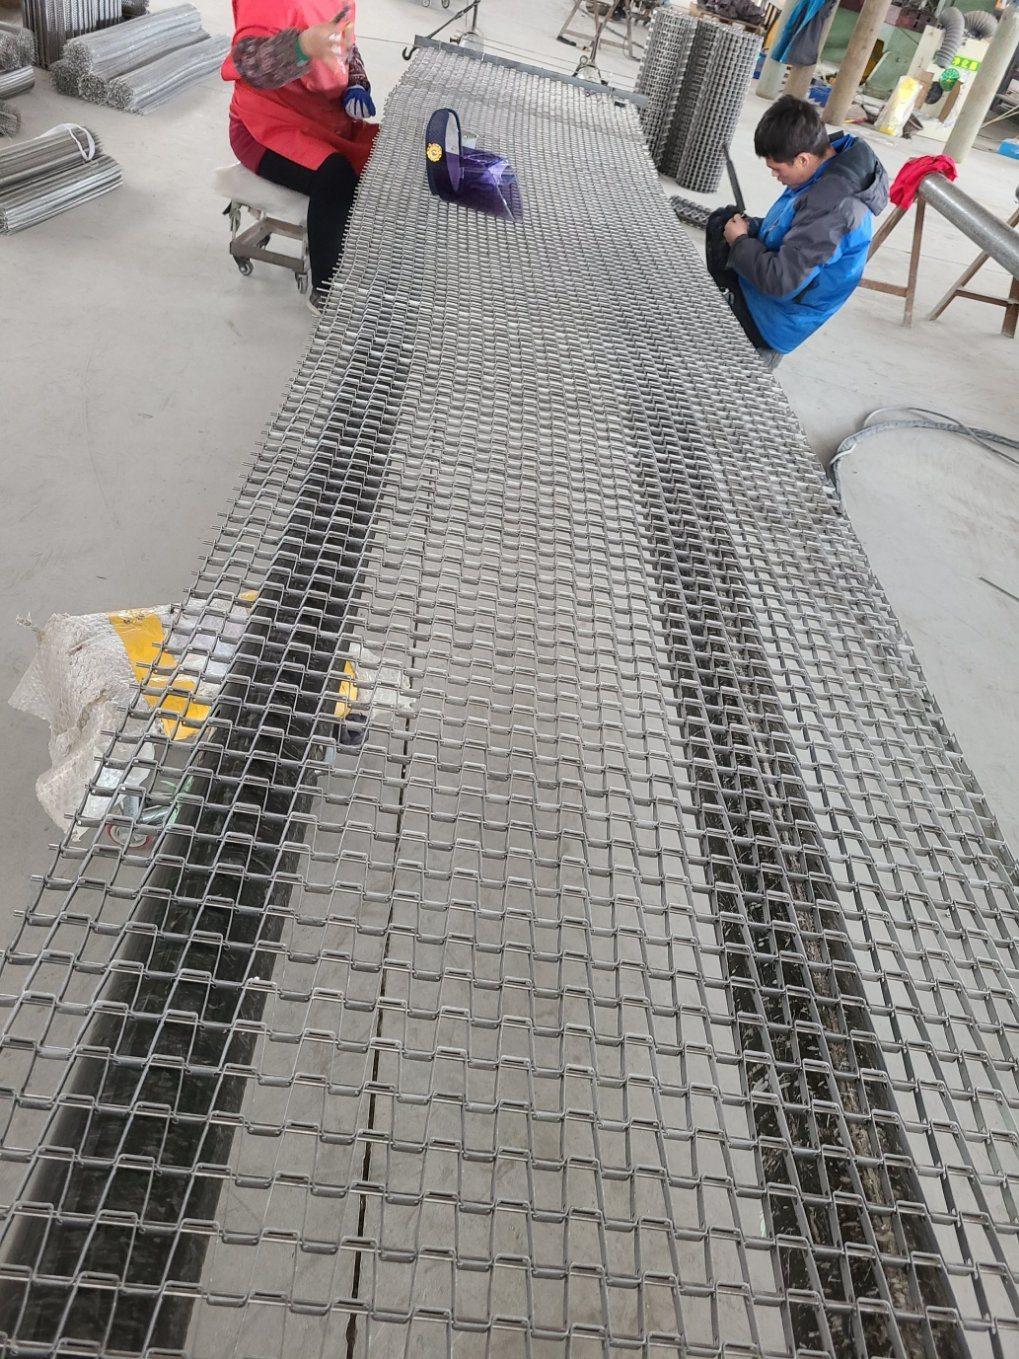 304 316 Stainless Steel Flat Flex Wire Mesh Conveyor Belt/Food Industry Stainless Steel Chain